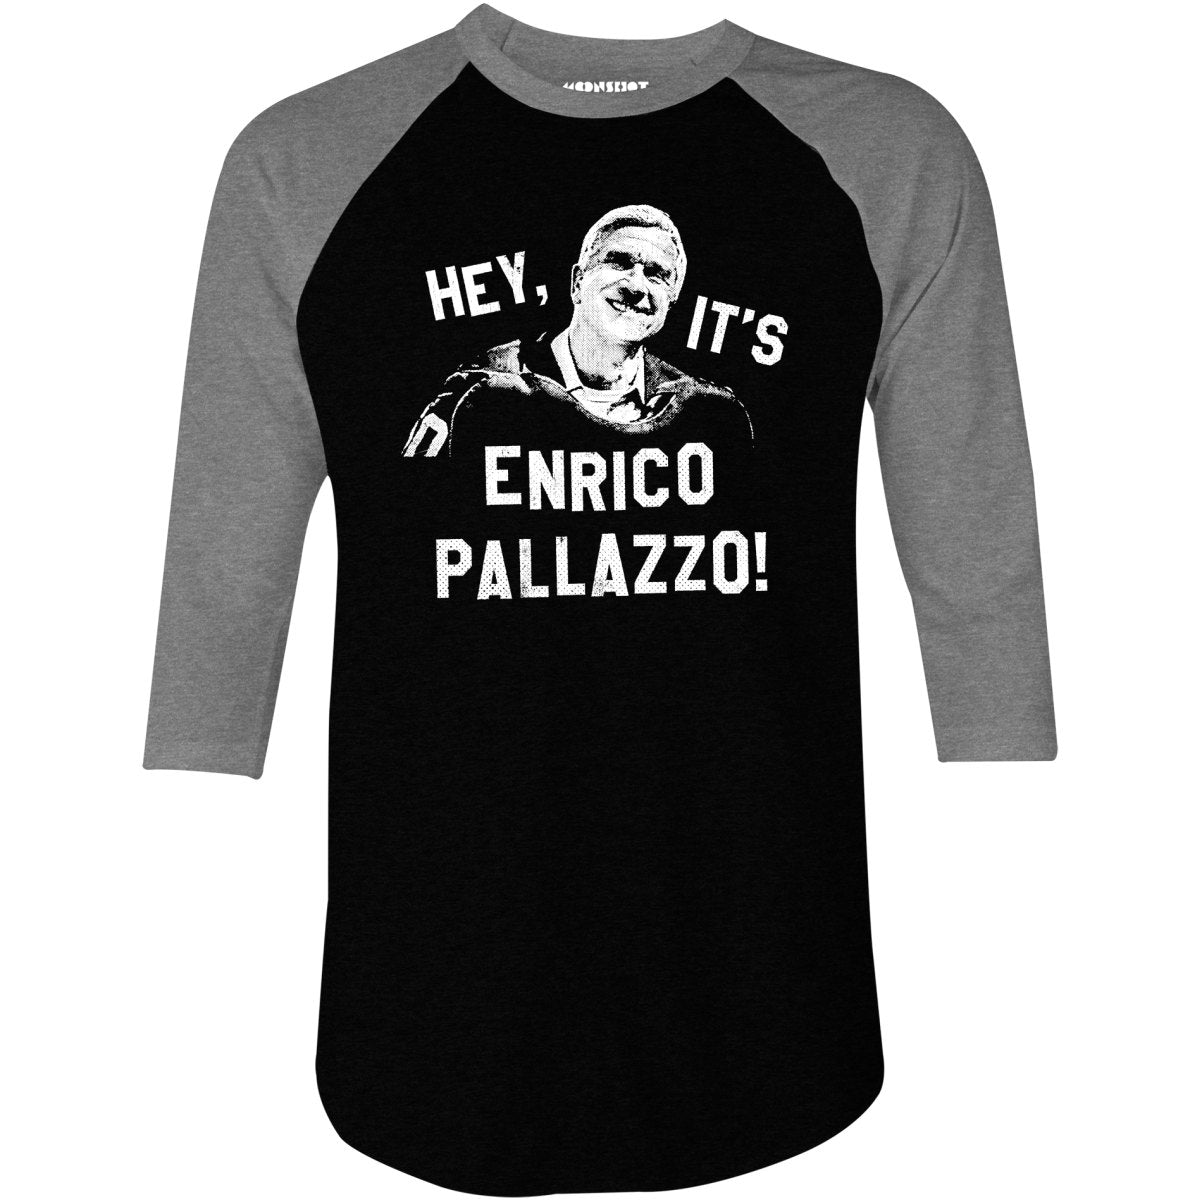 Hey, It's Enrico Pallazzo! - 3/4 Sleeve Raglan T-Shirt